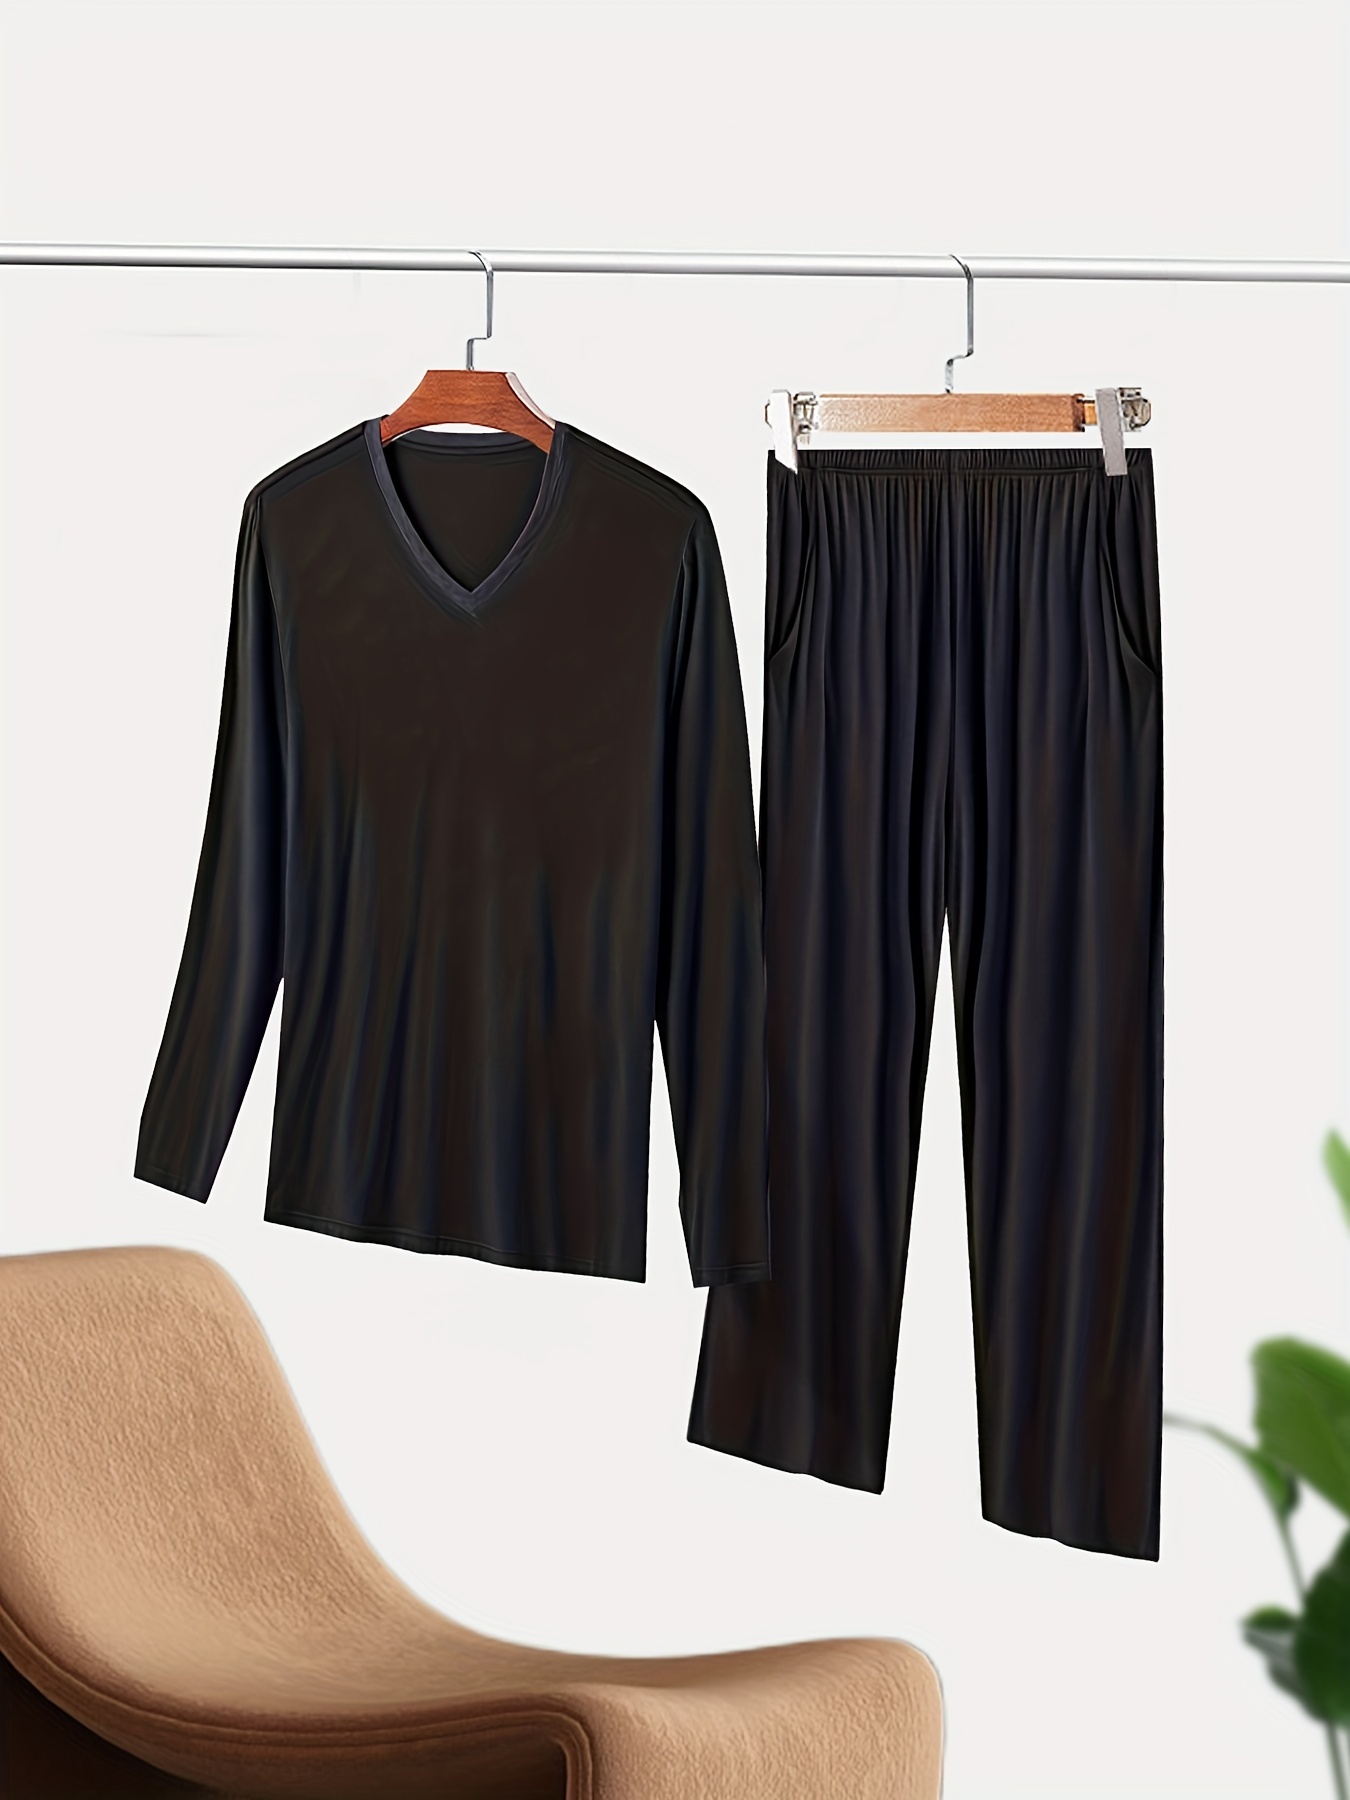 V Neck Nightwear Sleep Set Pajamas Ice Silk Printing Long Sleeve Homewear  Sleepwear Shirt Pant Outside 2Pcs Loose Homewear